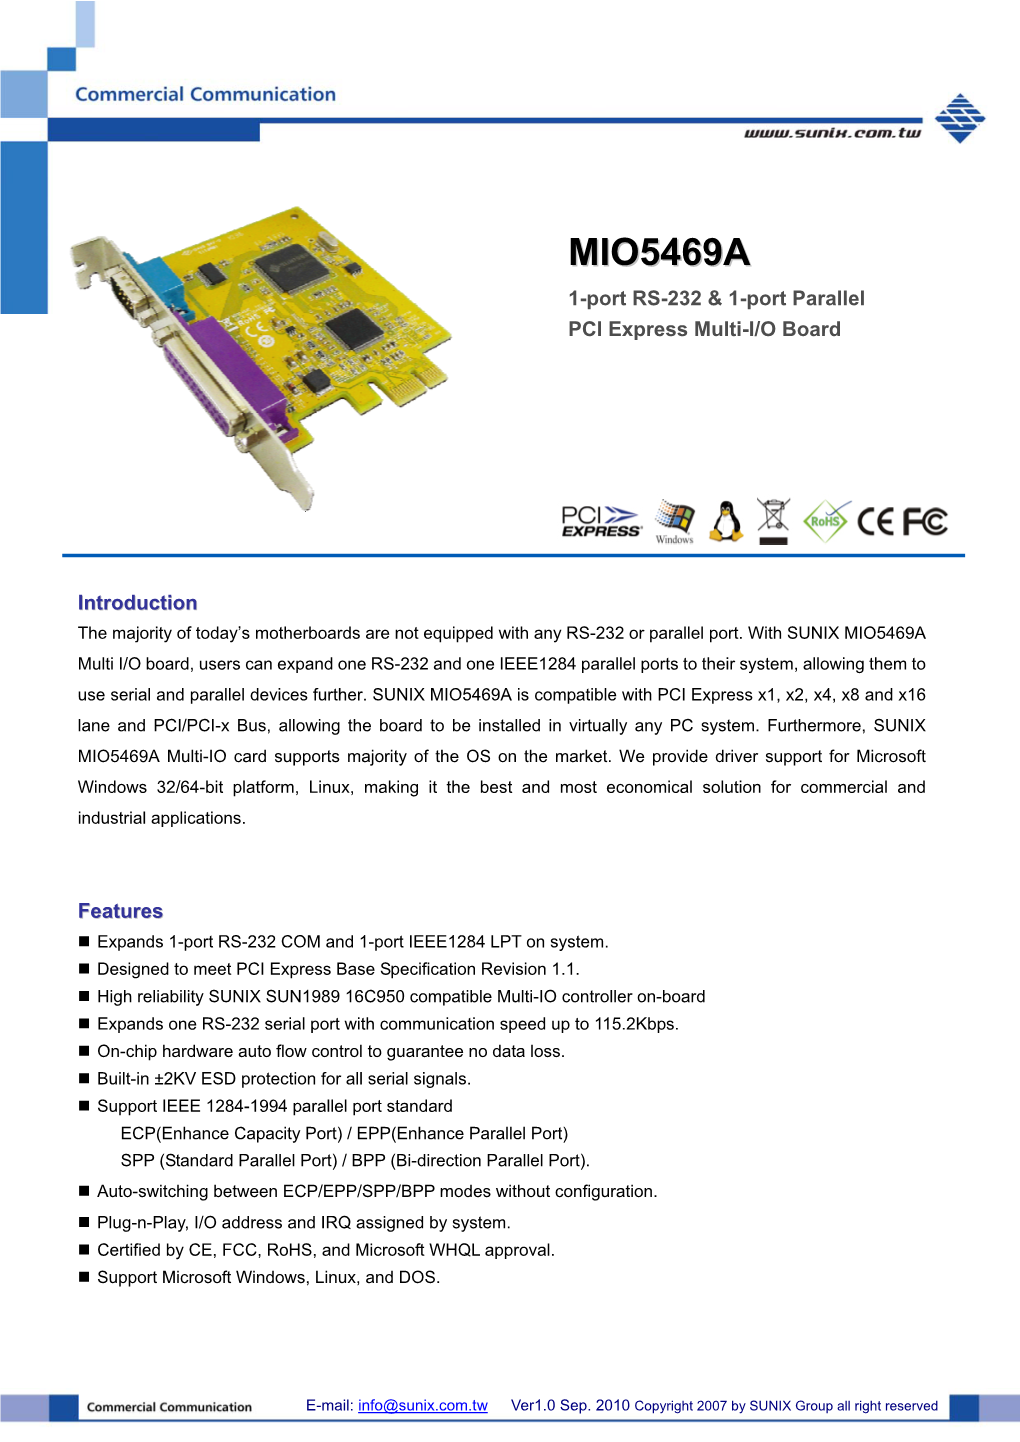 MIO5469A 1-Port RS-232 & 1-Port Parallel PCI Express Multi-I/O Board